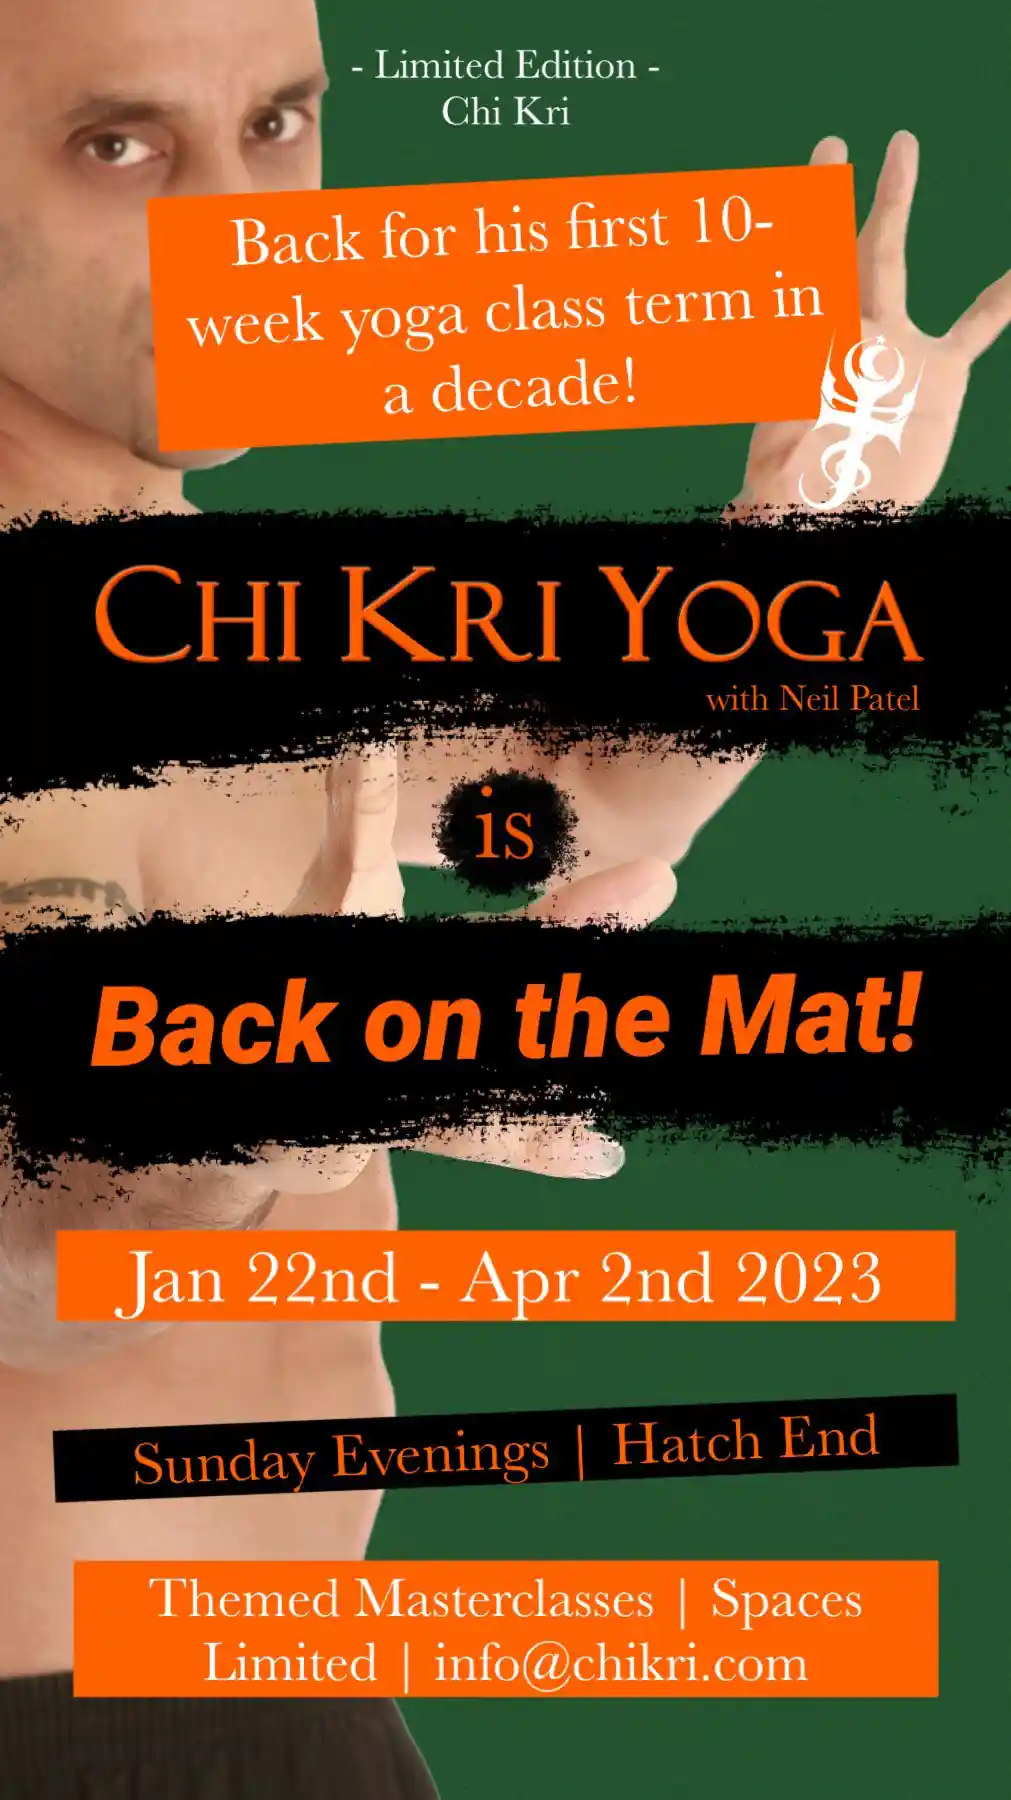 The Chi Kri Yoga Masterclass